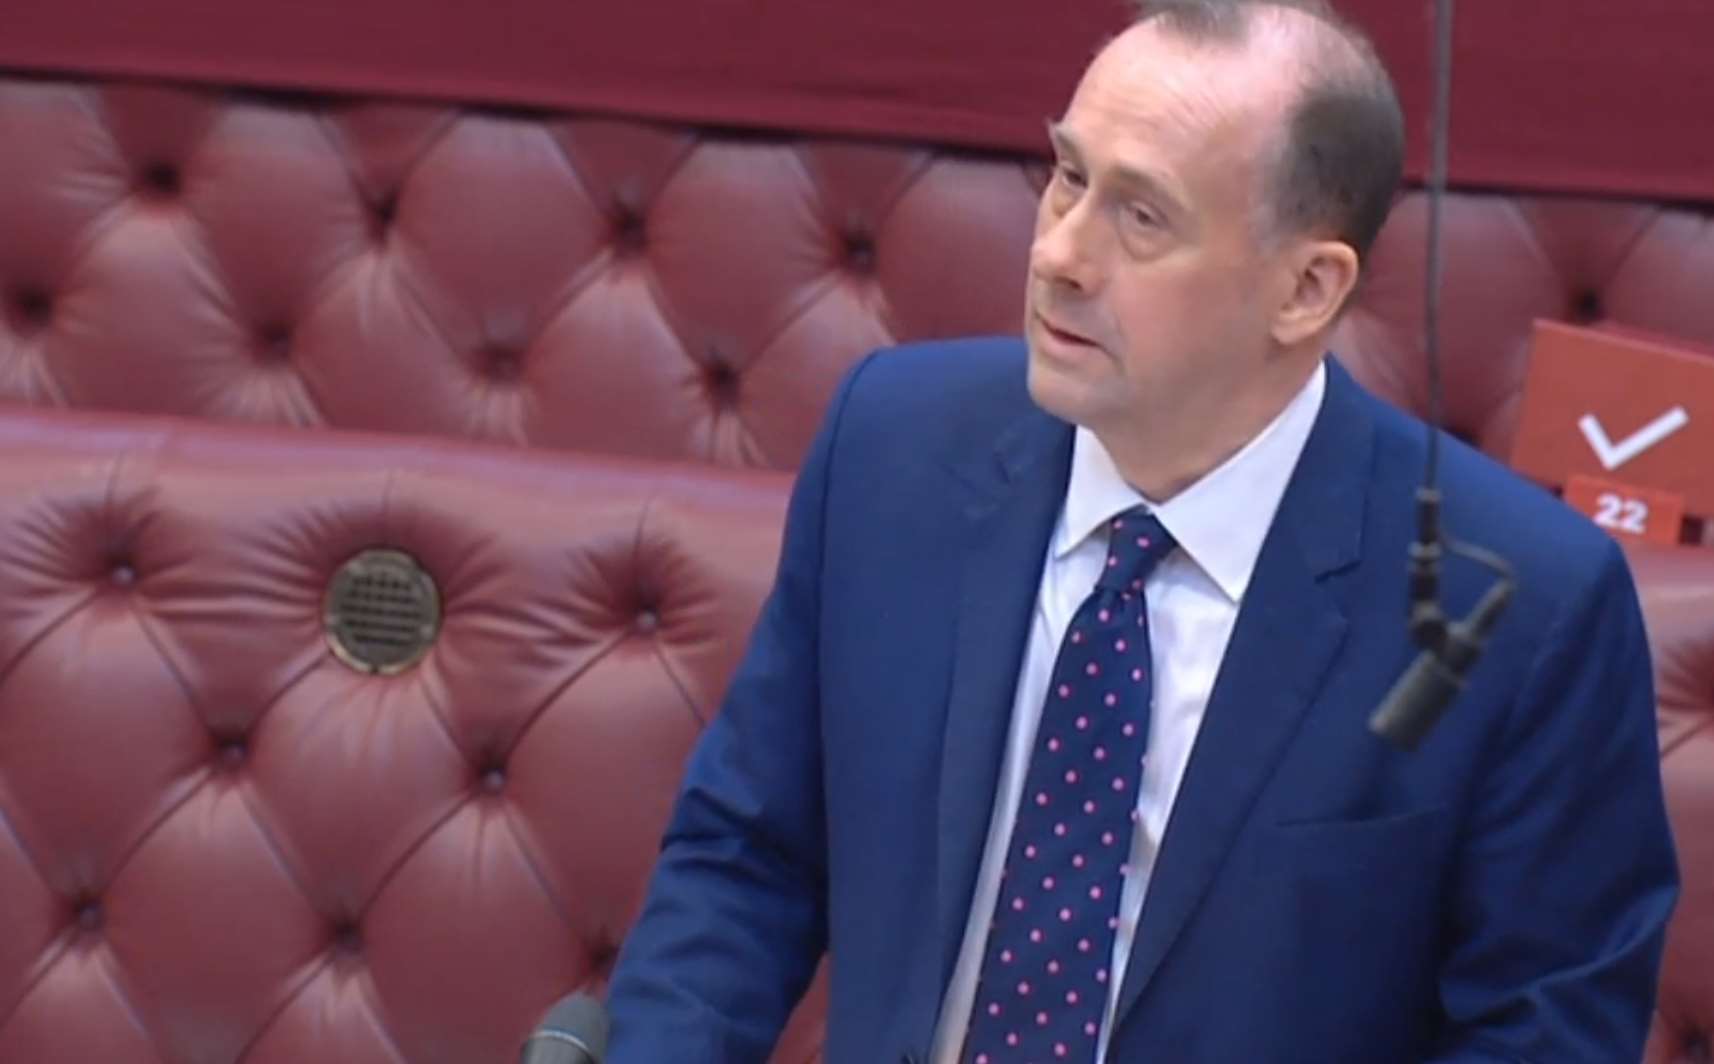 Business minister Lord Callanan addresses peers during a debate on coronavirus regulations (PA)